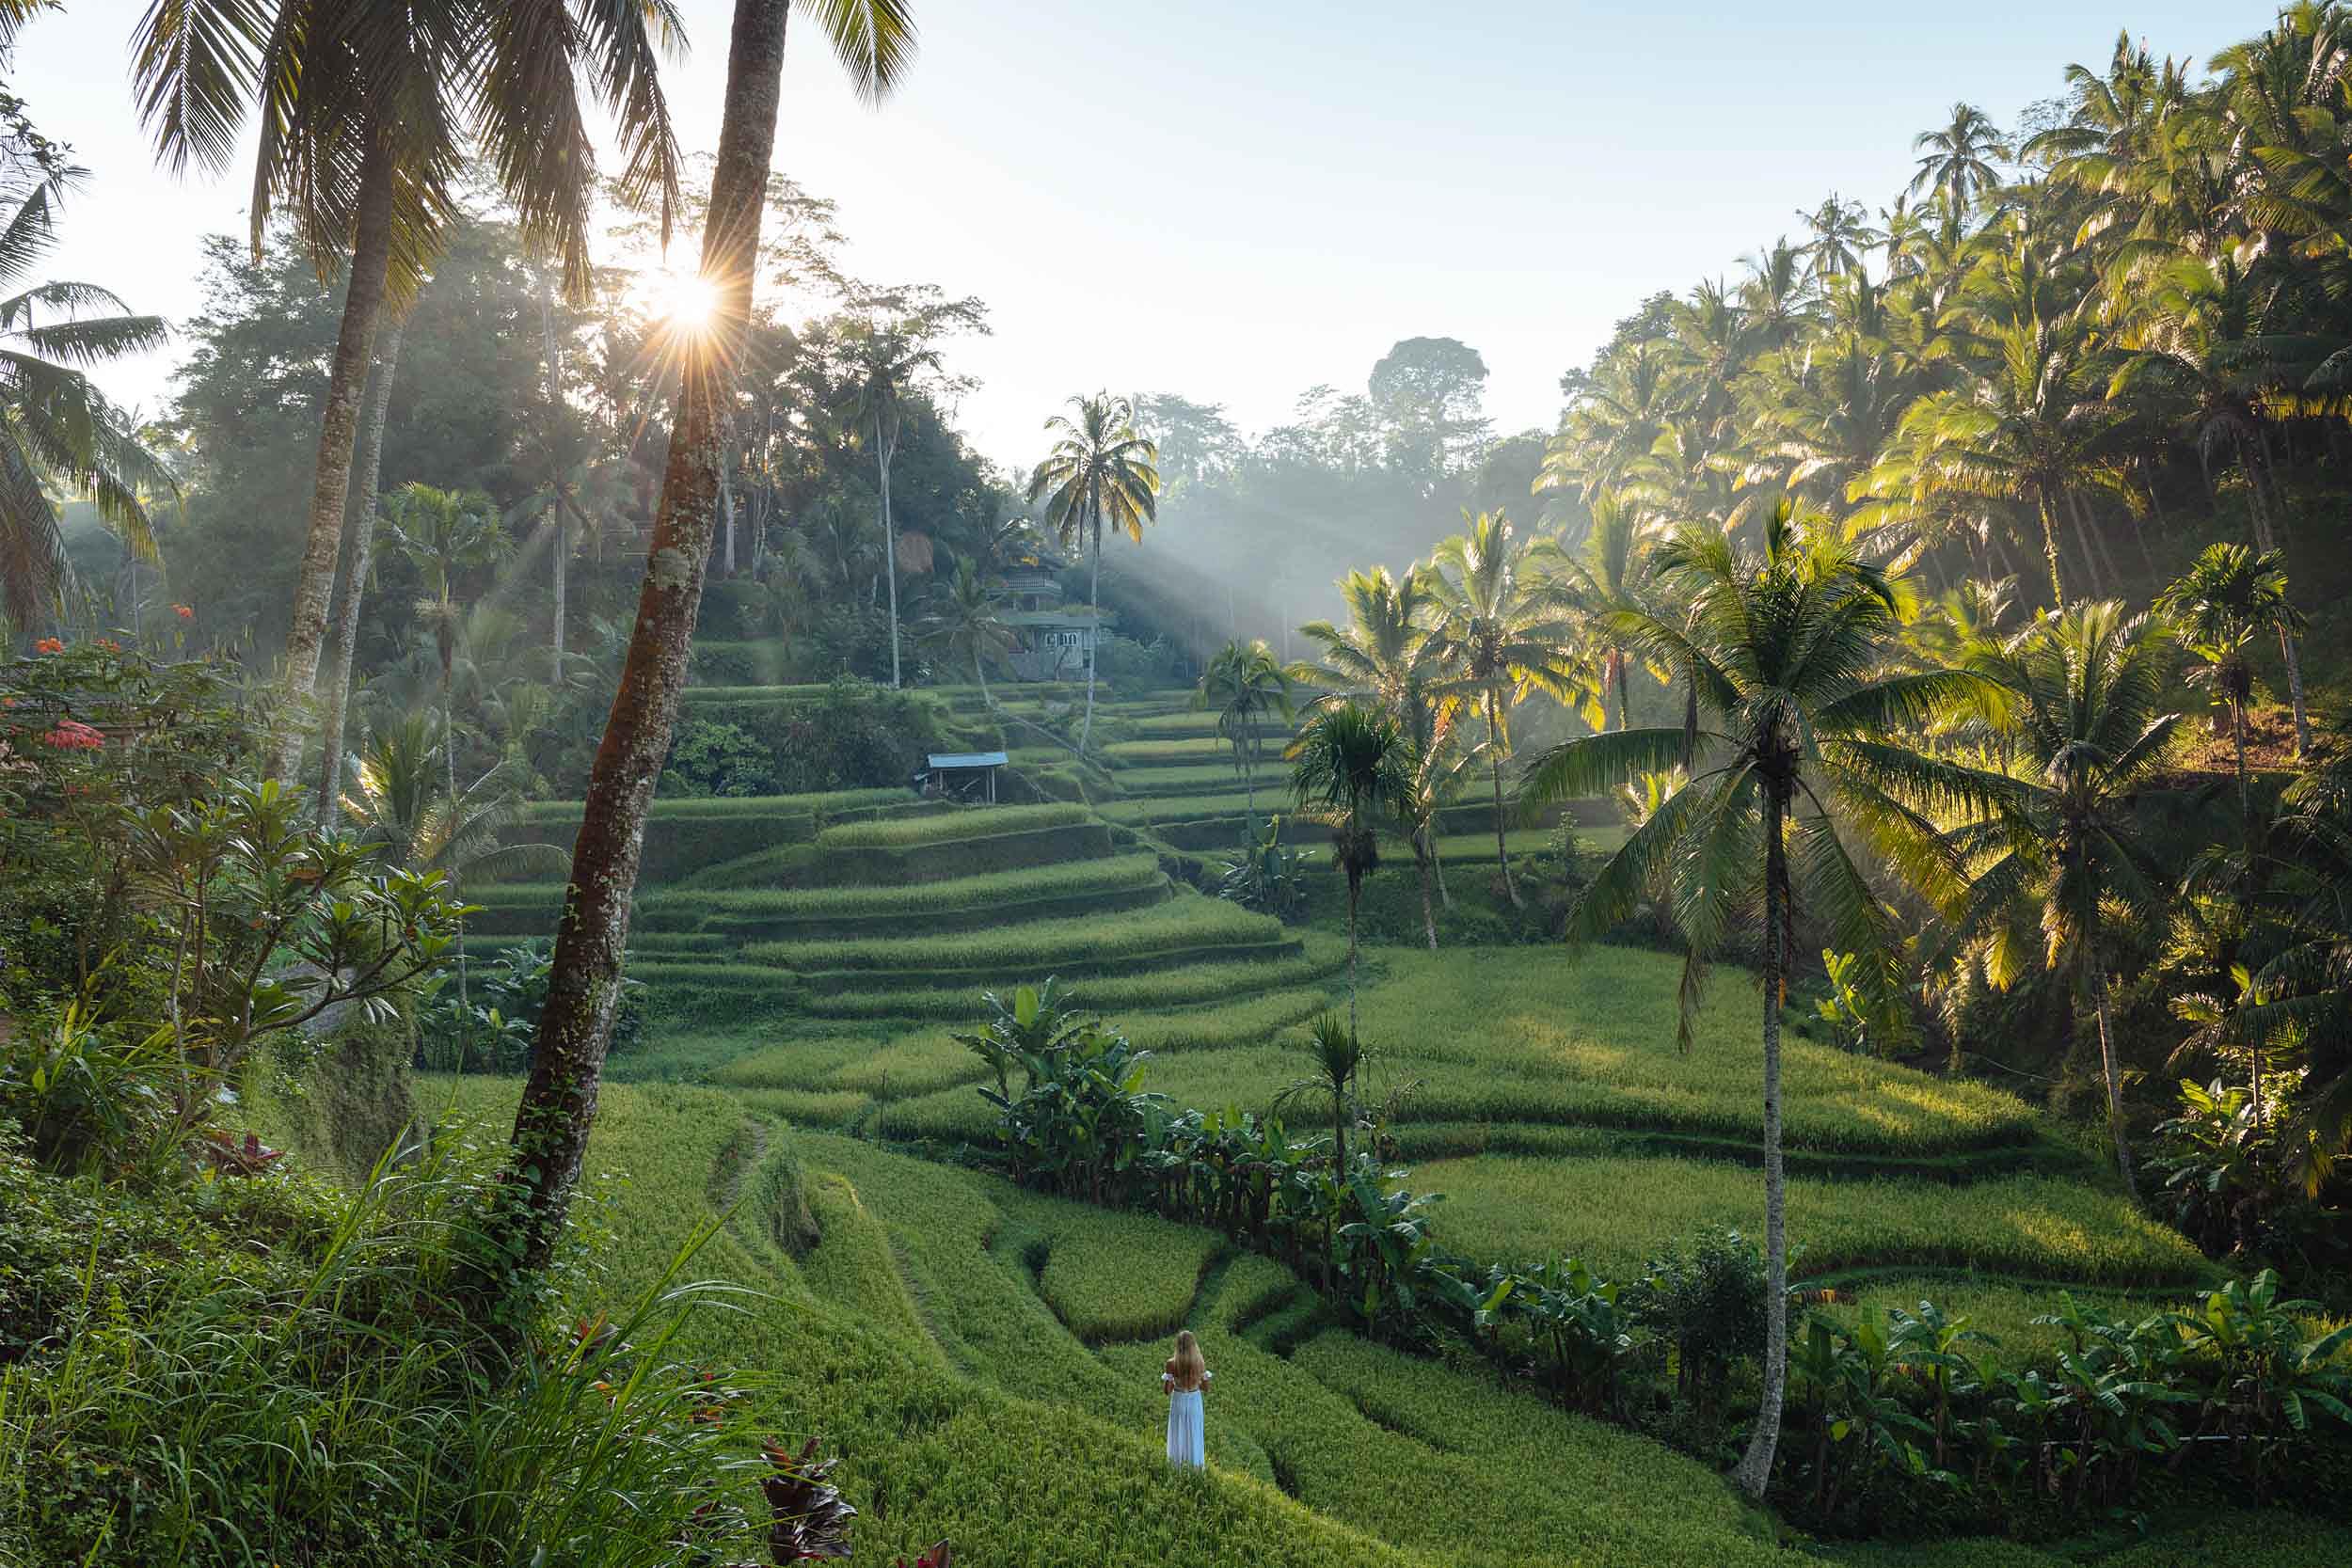 tegalalang-rice-terraces-dawn-travel-photography-ubud-bali-indonesia